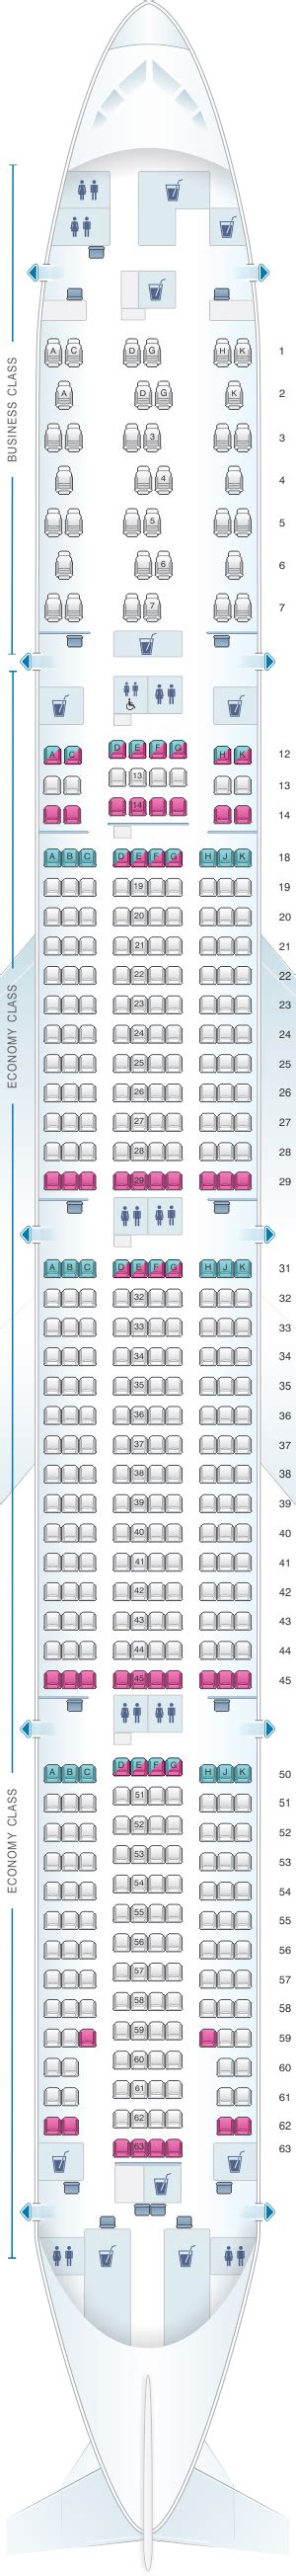 Air Canada 777 300er Seat Map